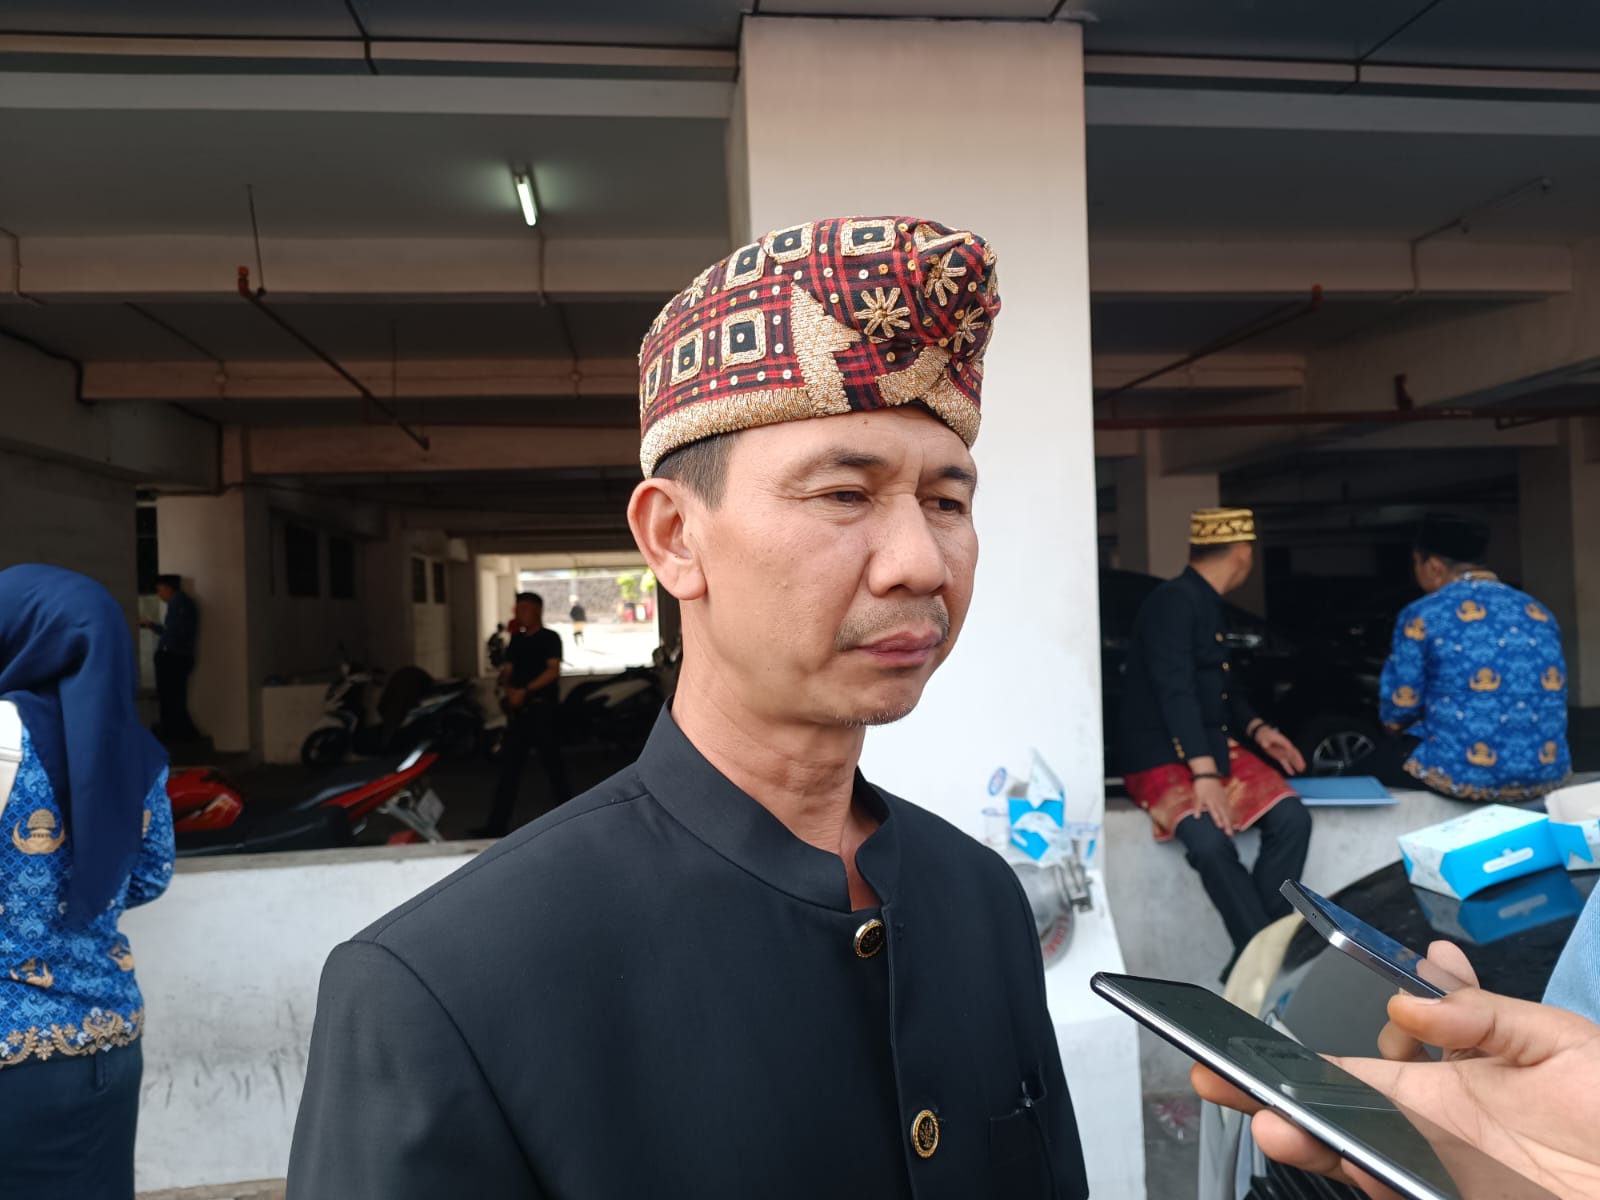 Dinas Pariwisata Perkirakan 50 Ribu Wisatawan Berkunjung ke Bandar Lampung di Libur Panjang Waisak